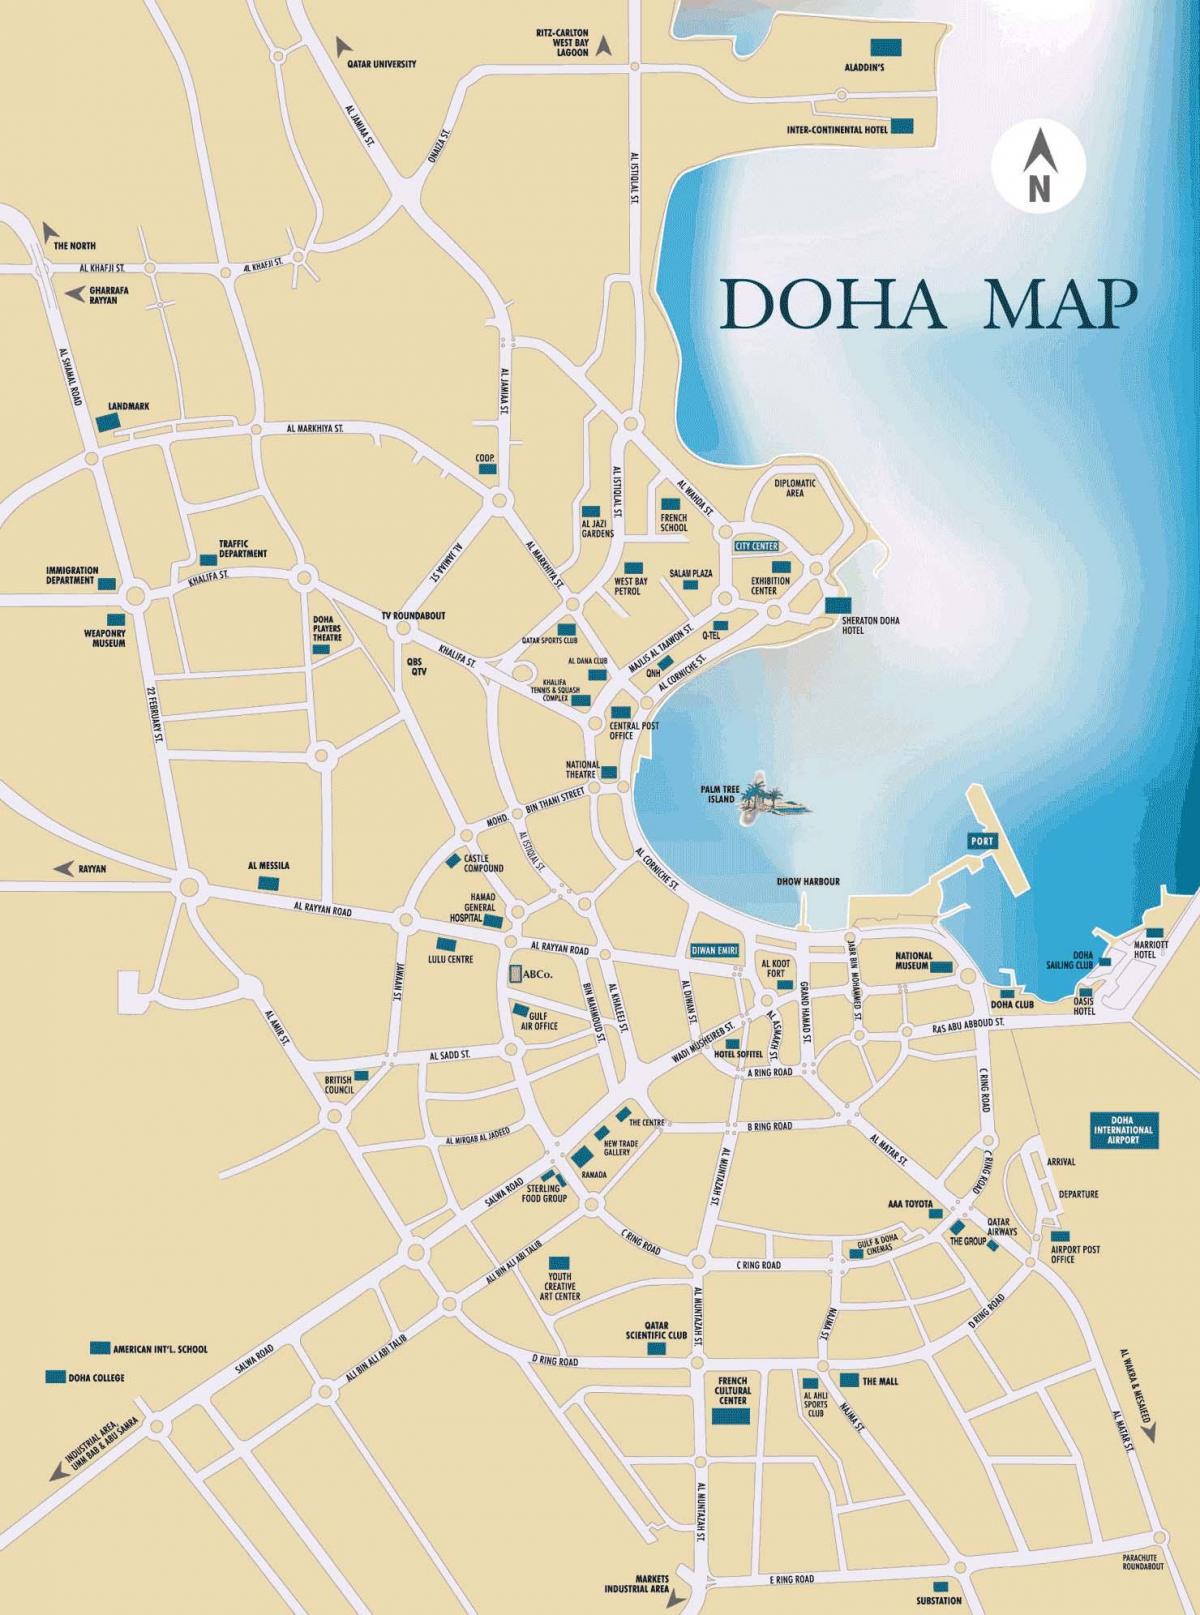 Kort af doha, qatar